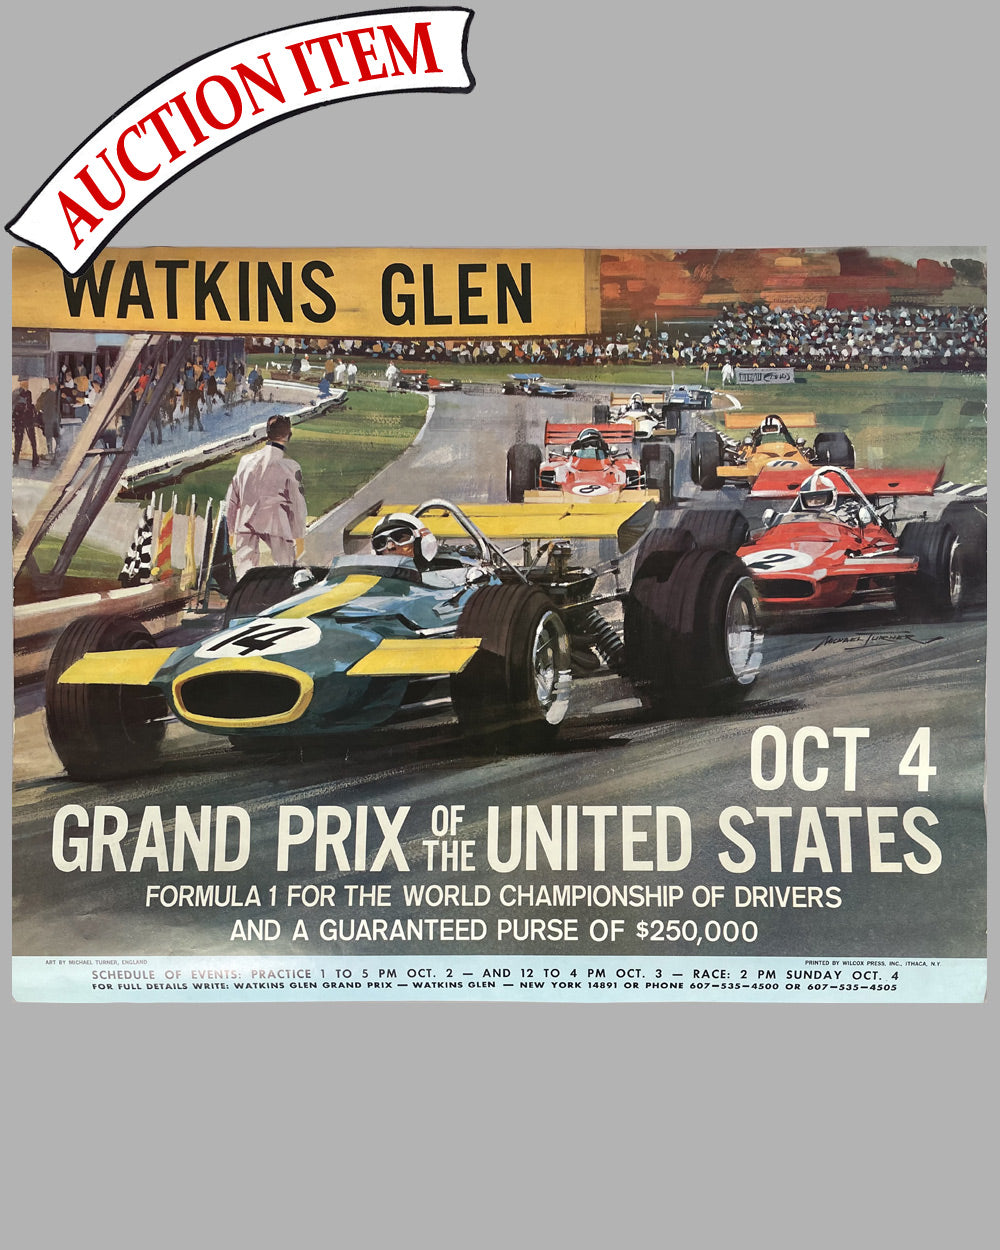 1970 Grand Prix of Watkins Glen original event poster by Michael Turner